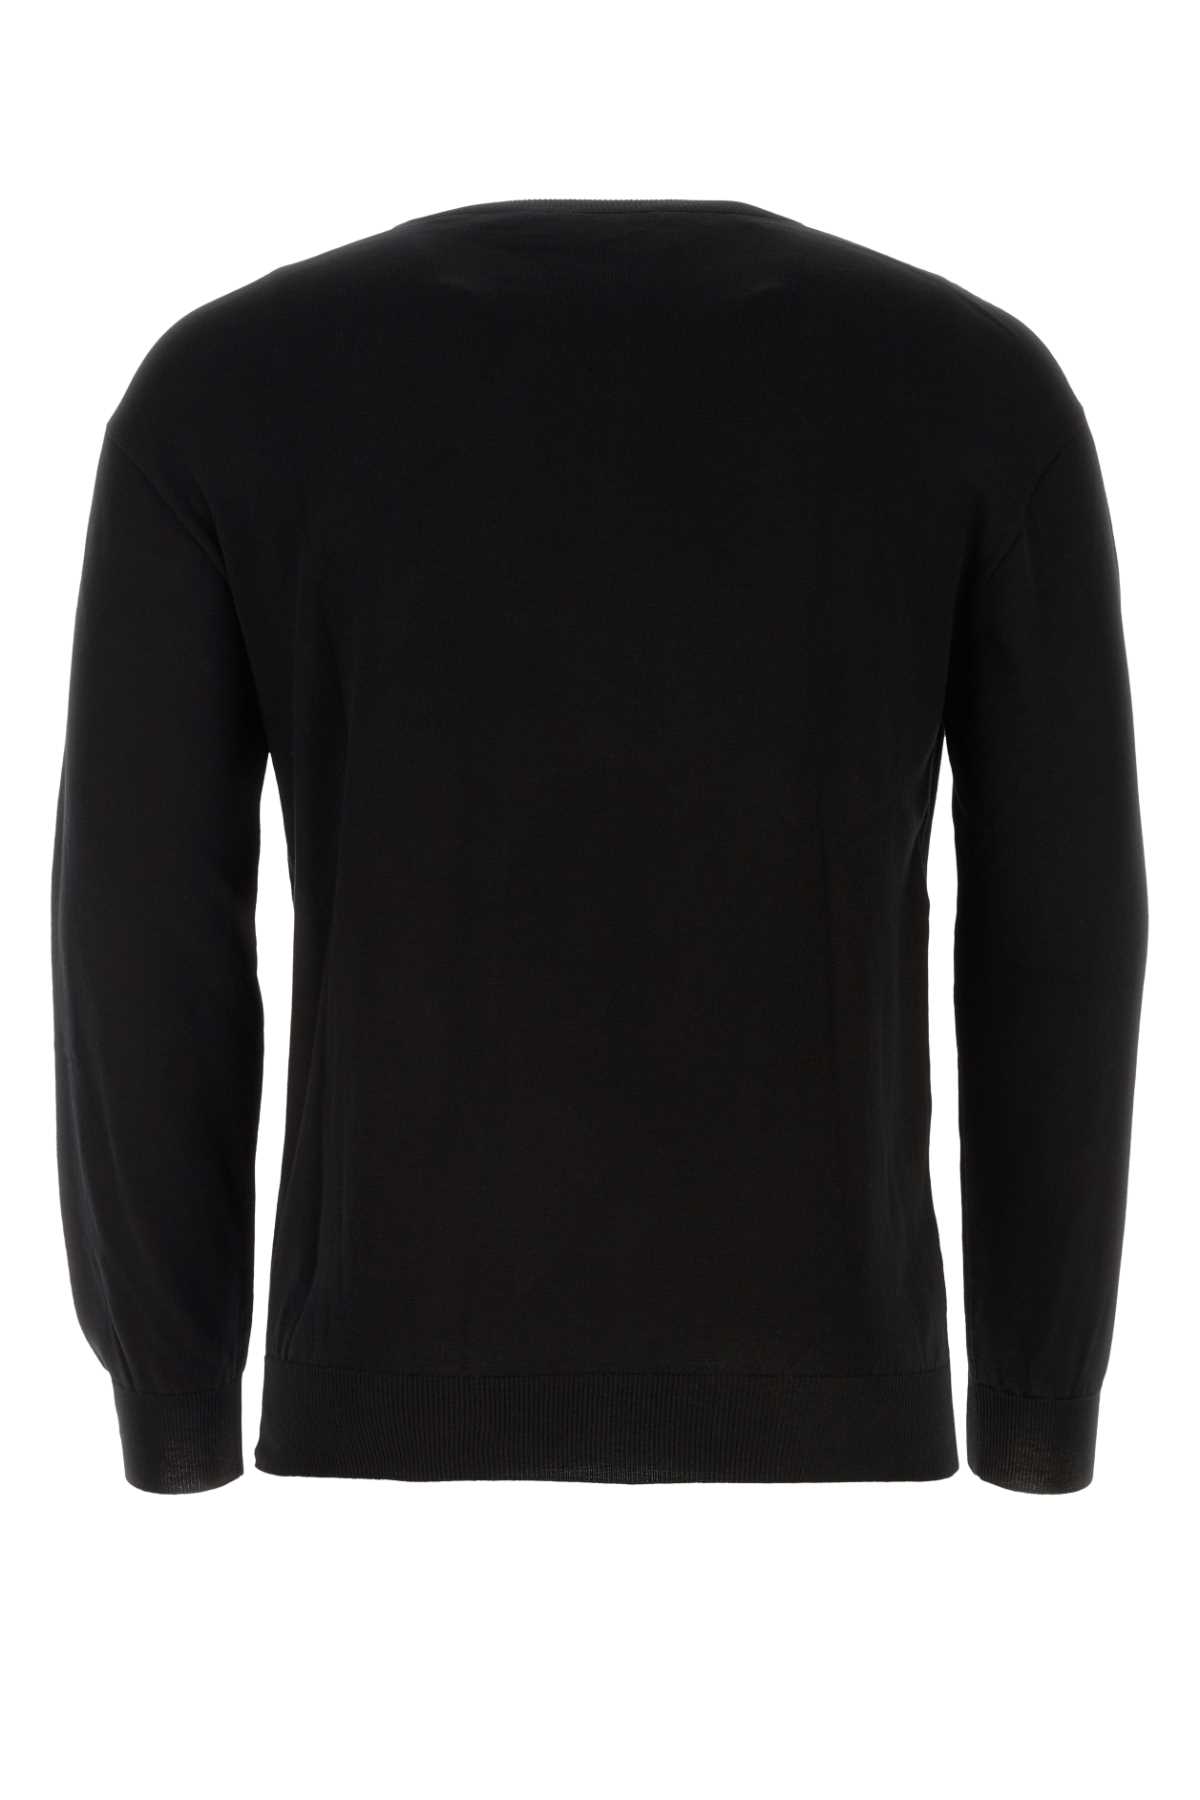 Moschino Black Cotton Sweater In 0555